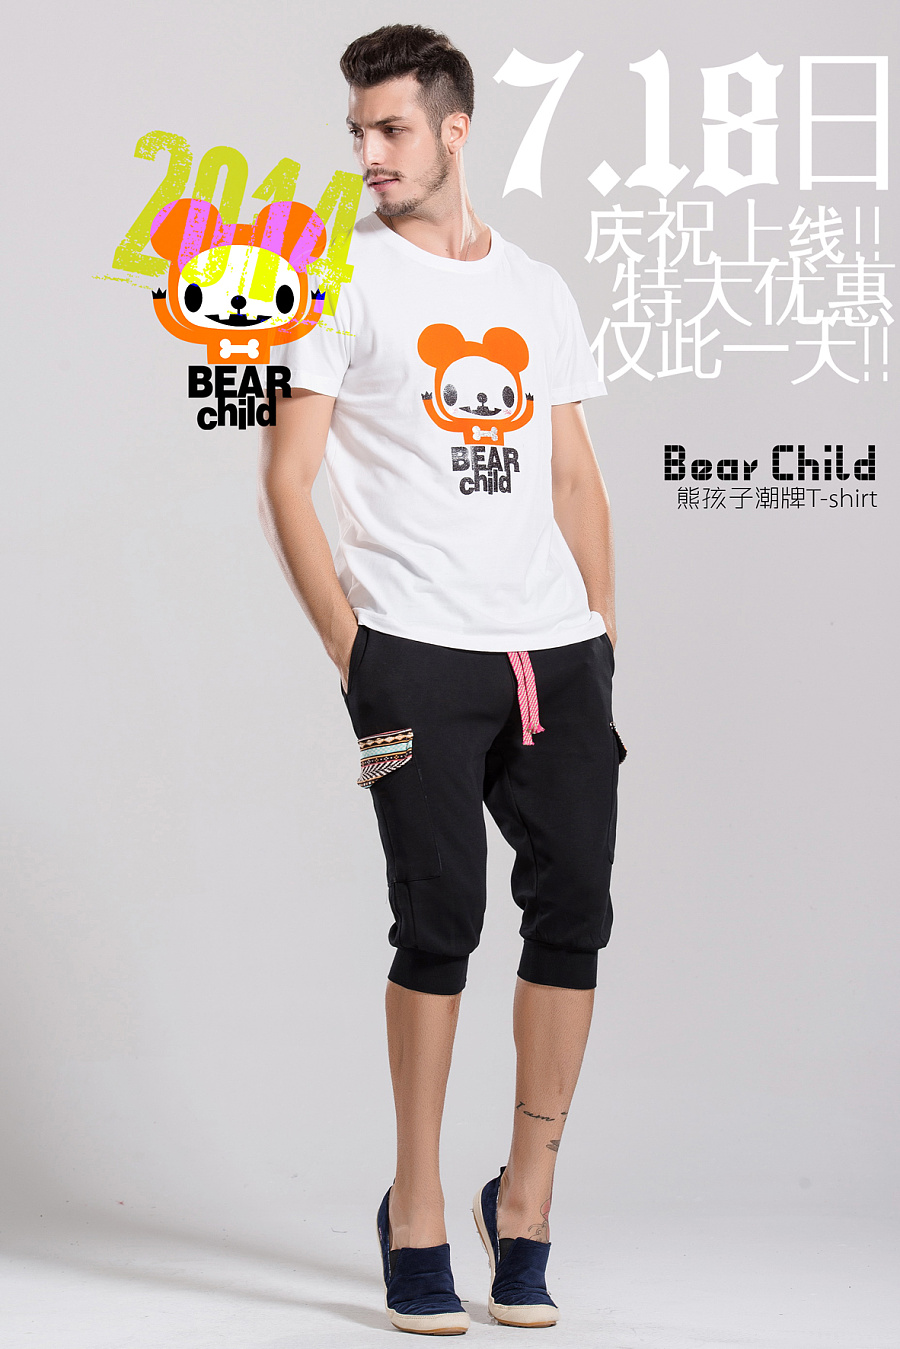 bear child熊孩子卡通潮牌 我的设计品牌T恤 李